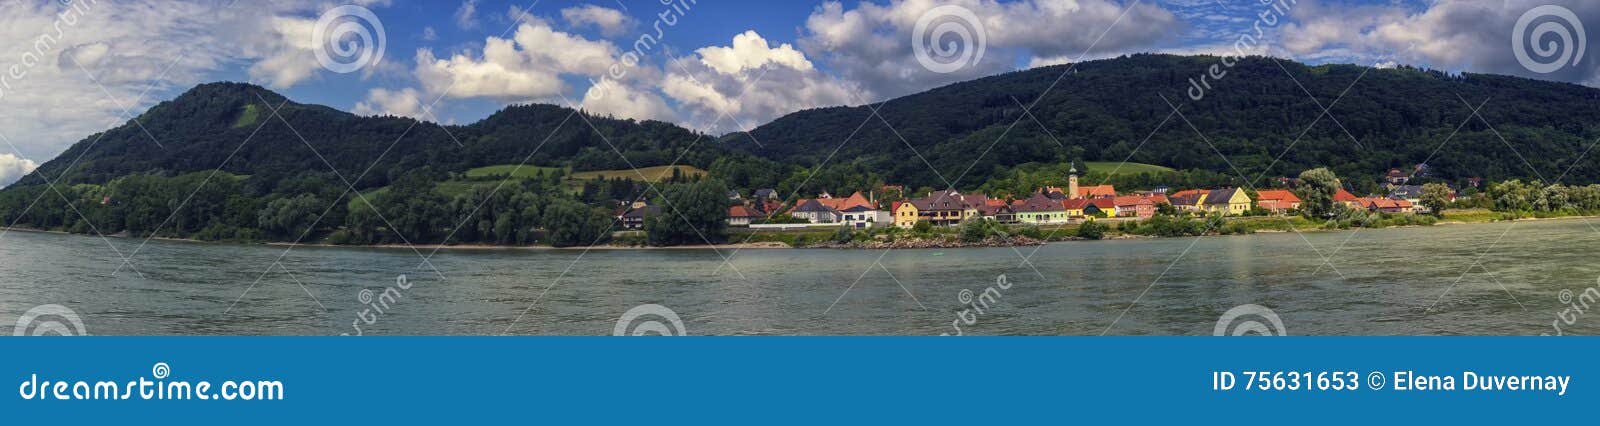 village of willendorf on the river danube in the wachau region, austria